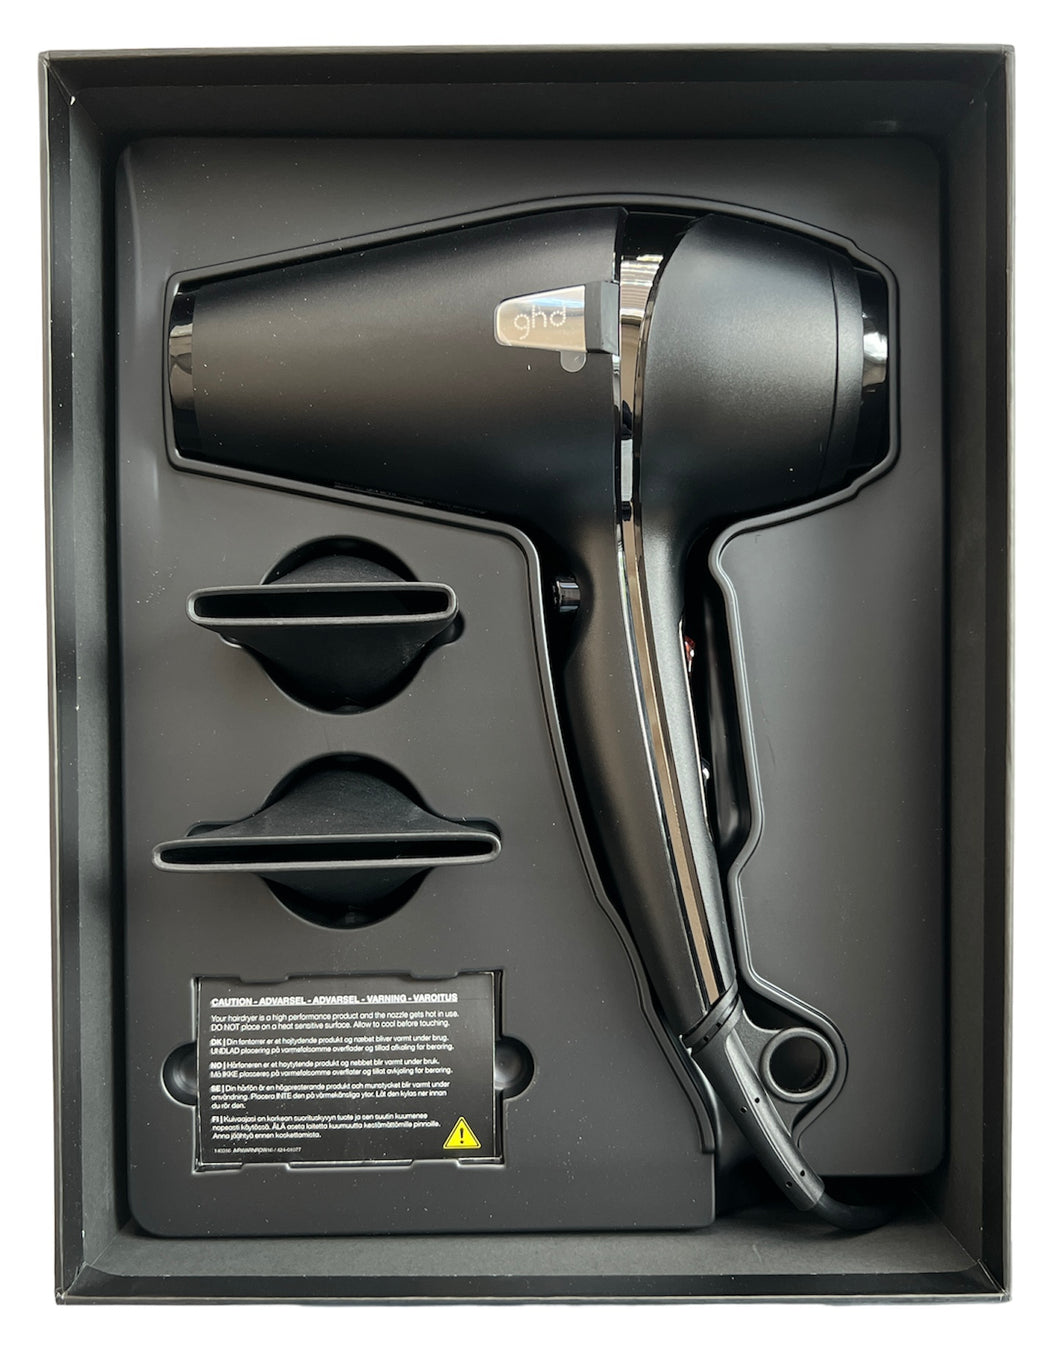 Air® Professional hairdryer - ghd